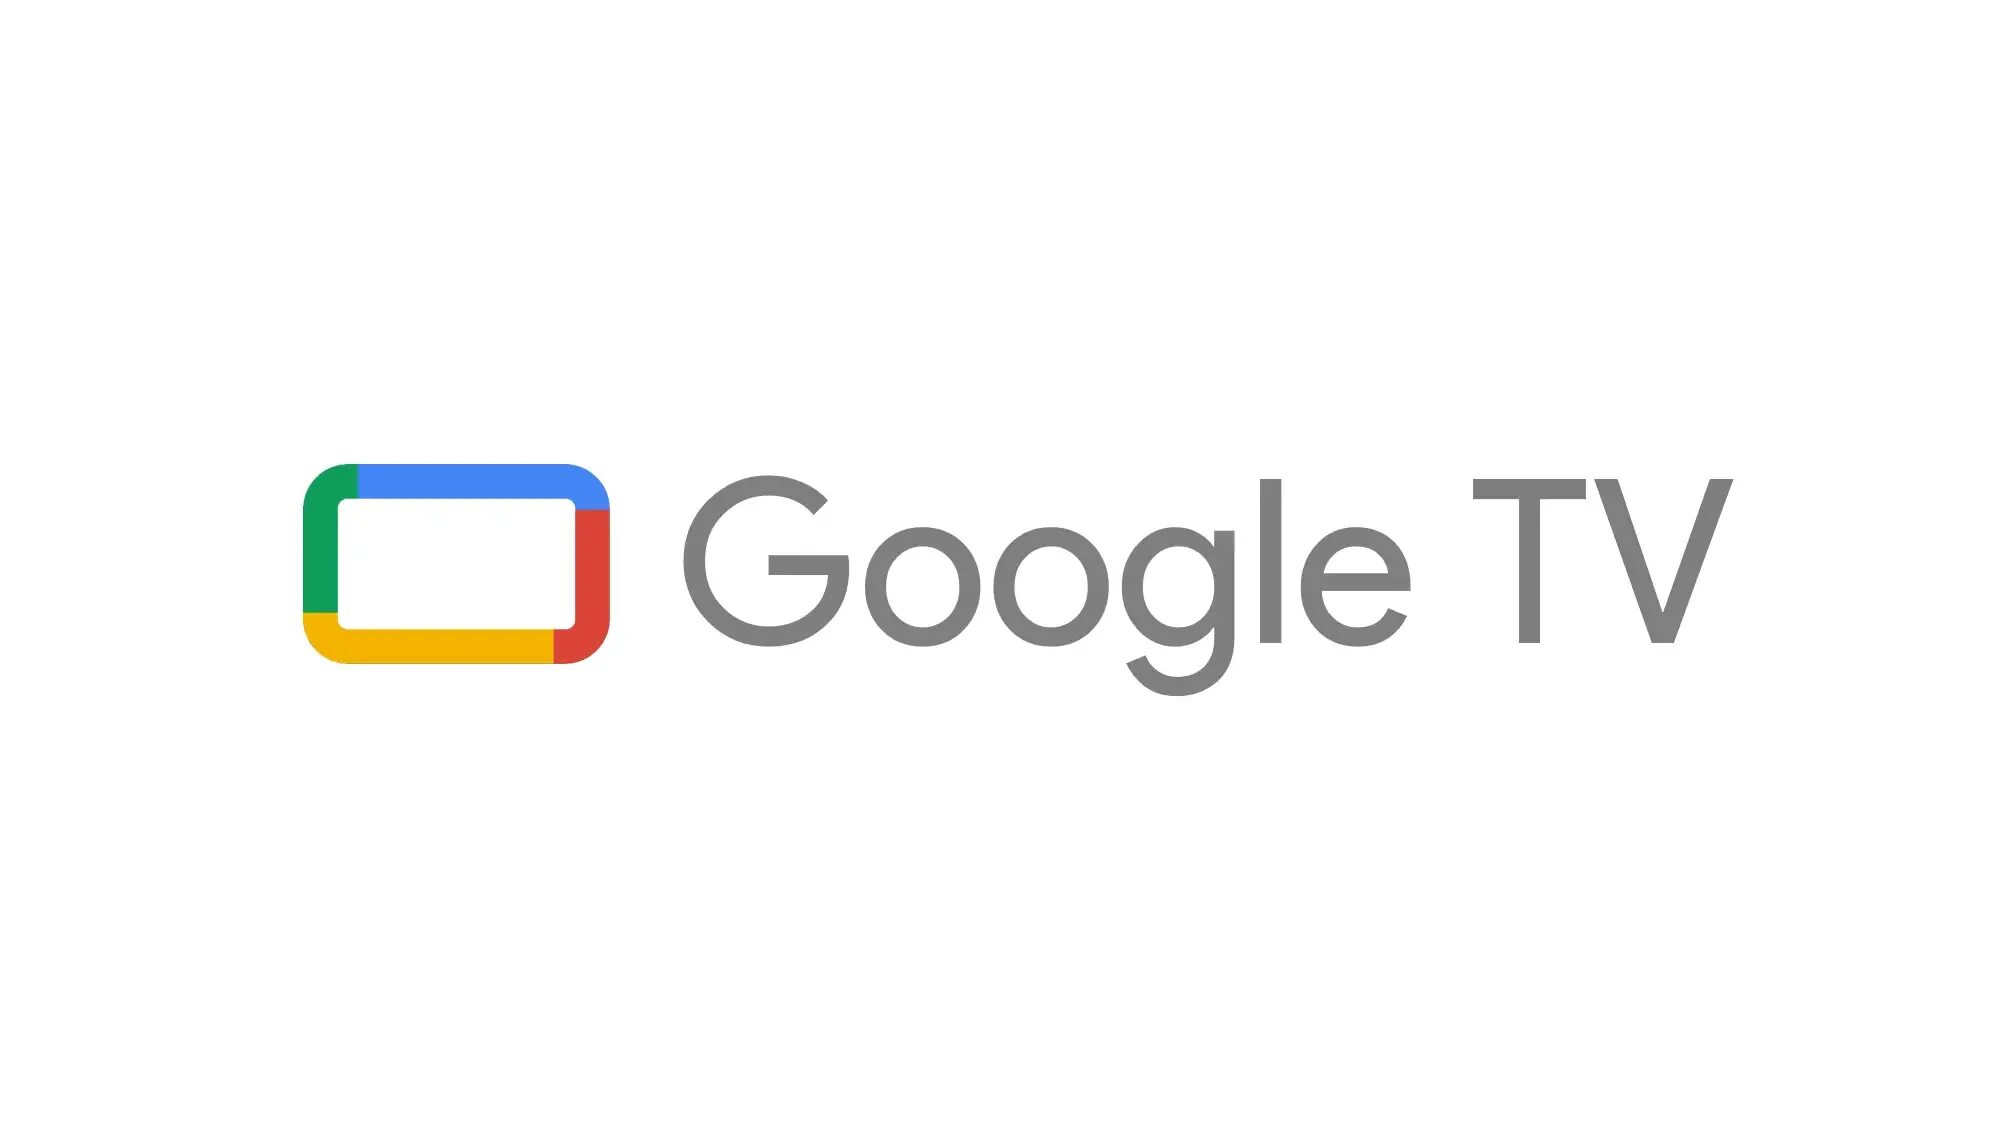 Channel google. Google TV логотип. Google логотип 2022. Google TV (платформа Smart TV).